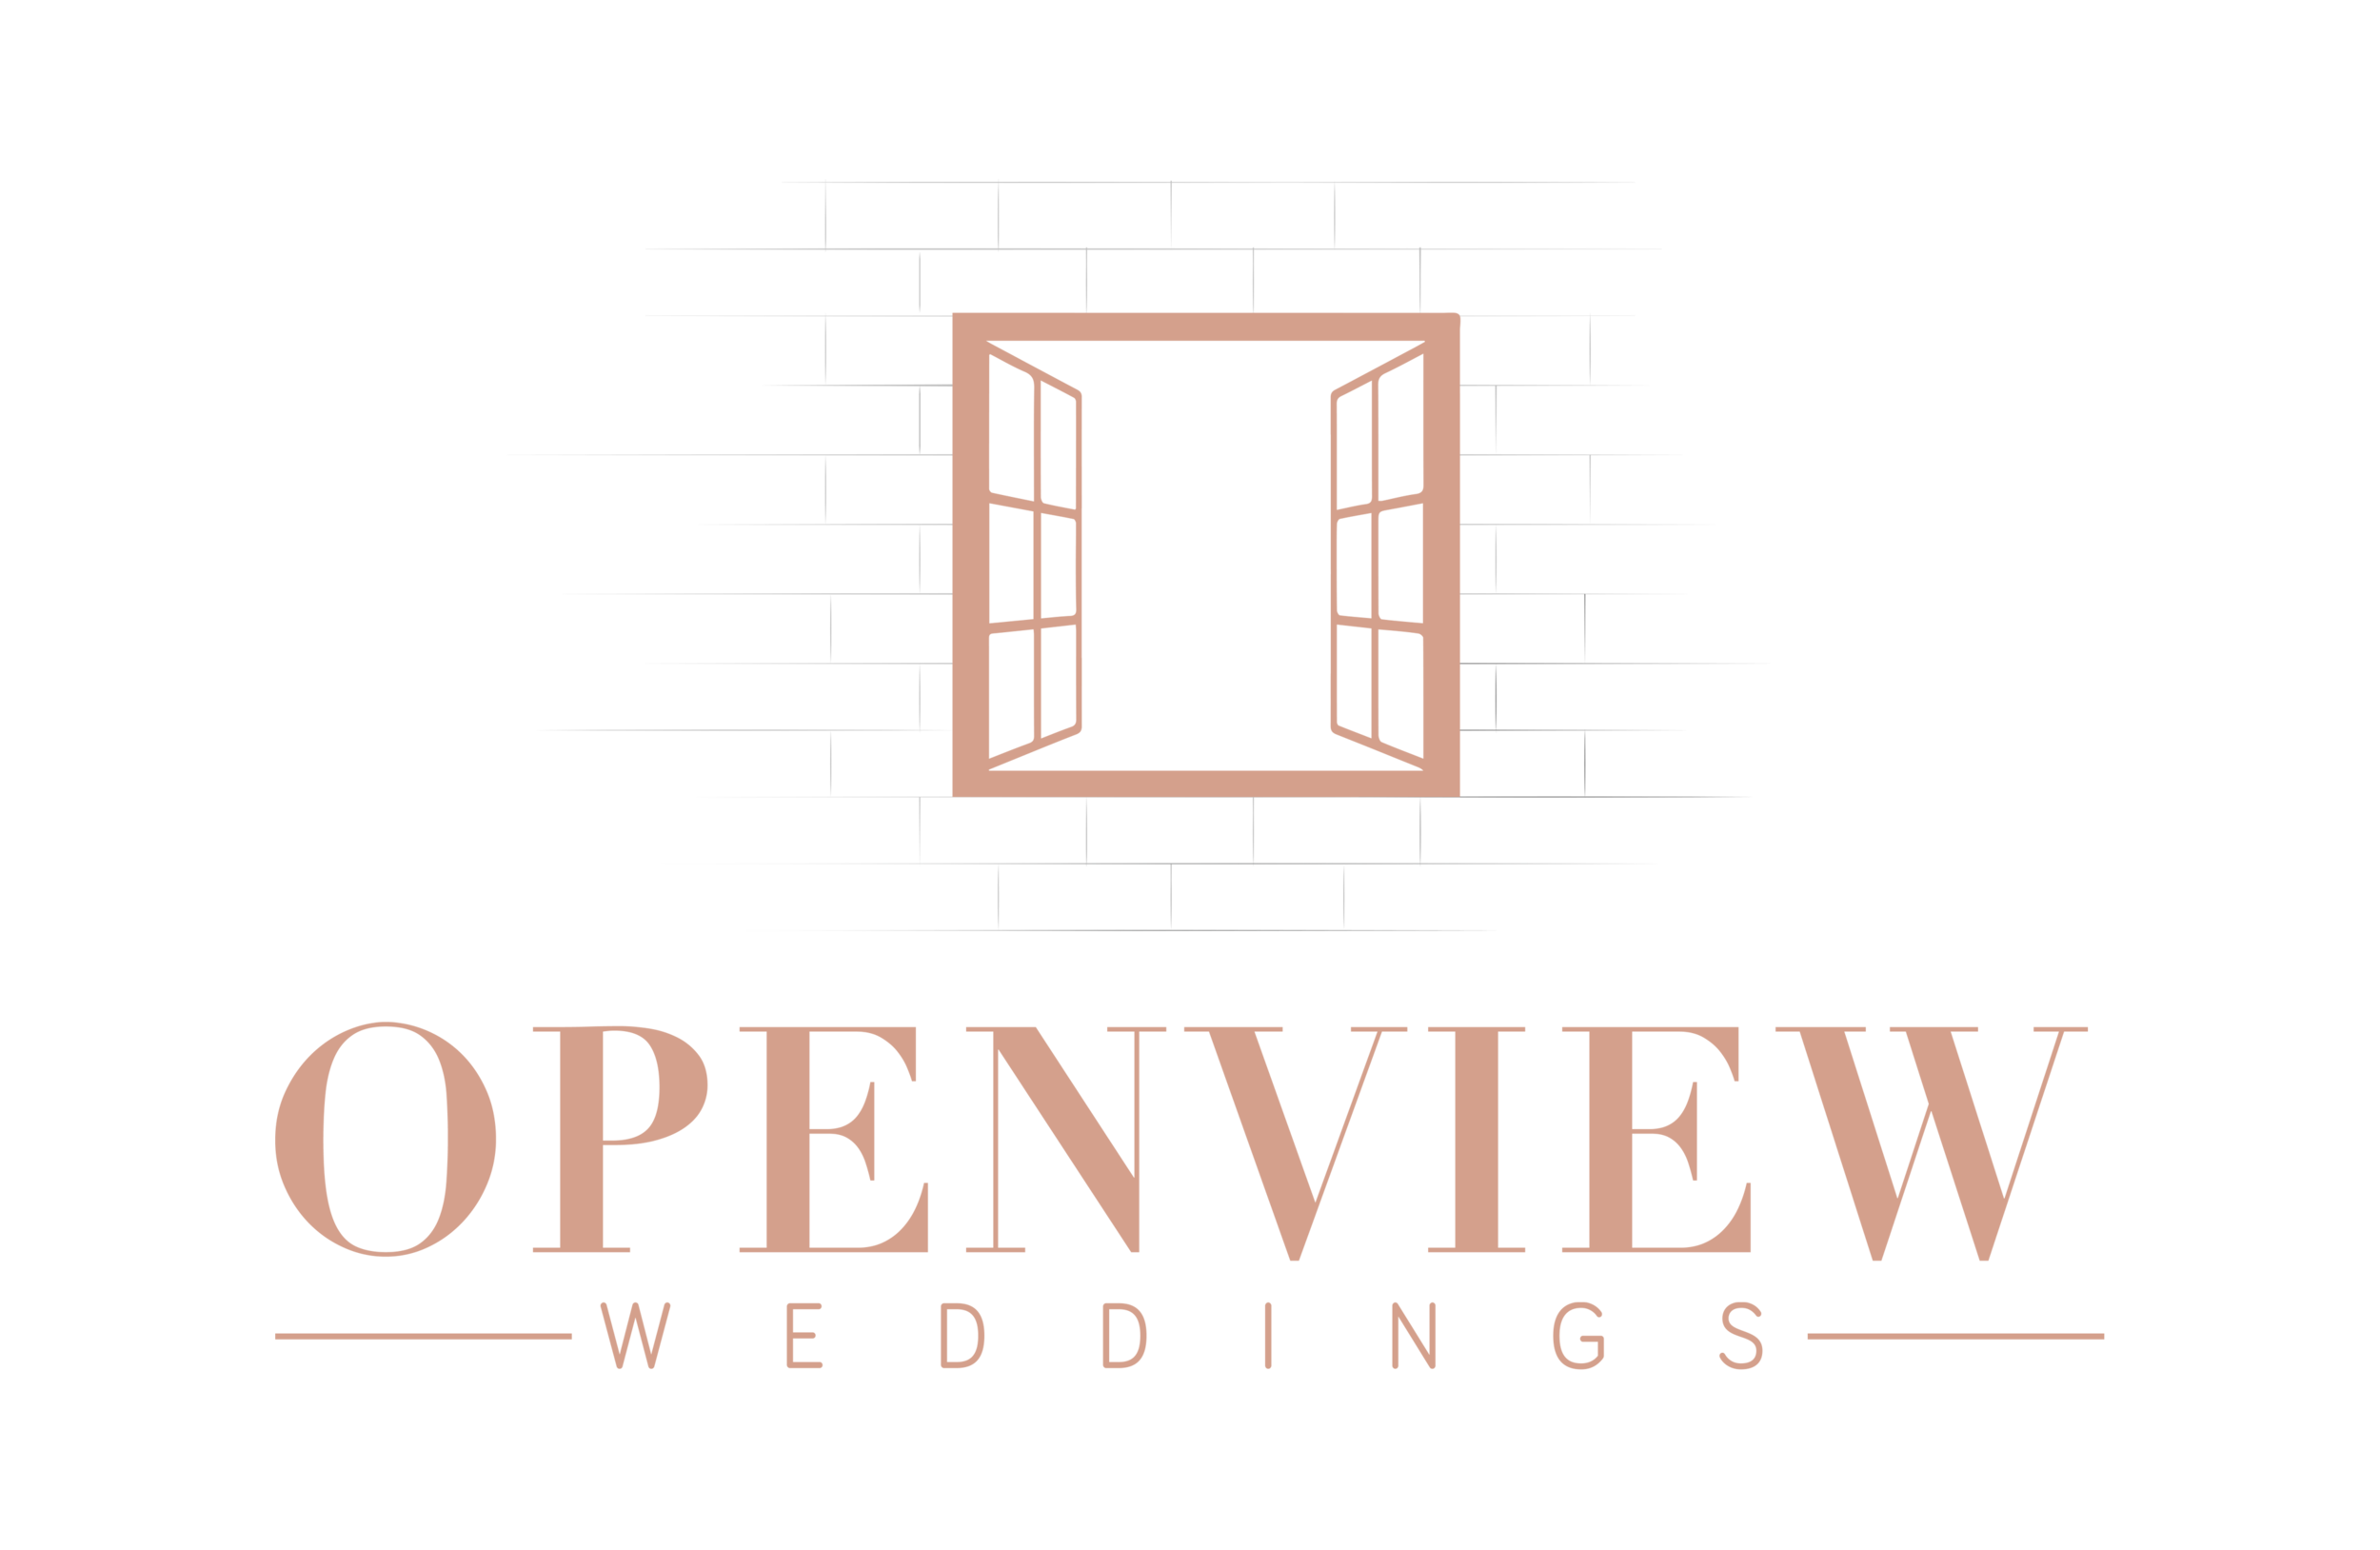 Openview Weddings